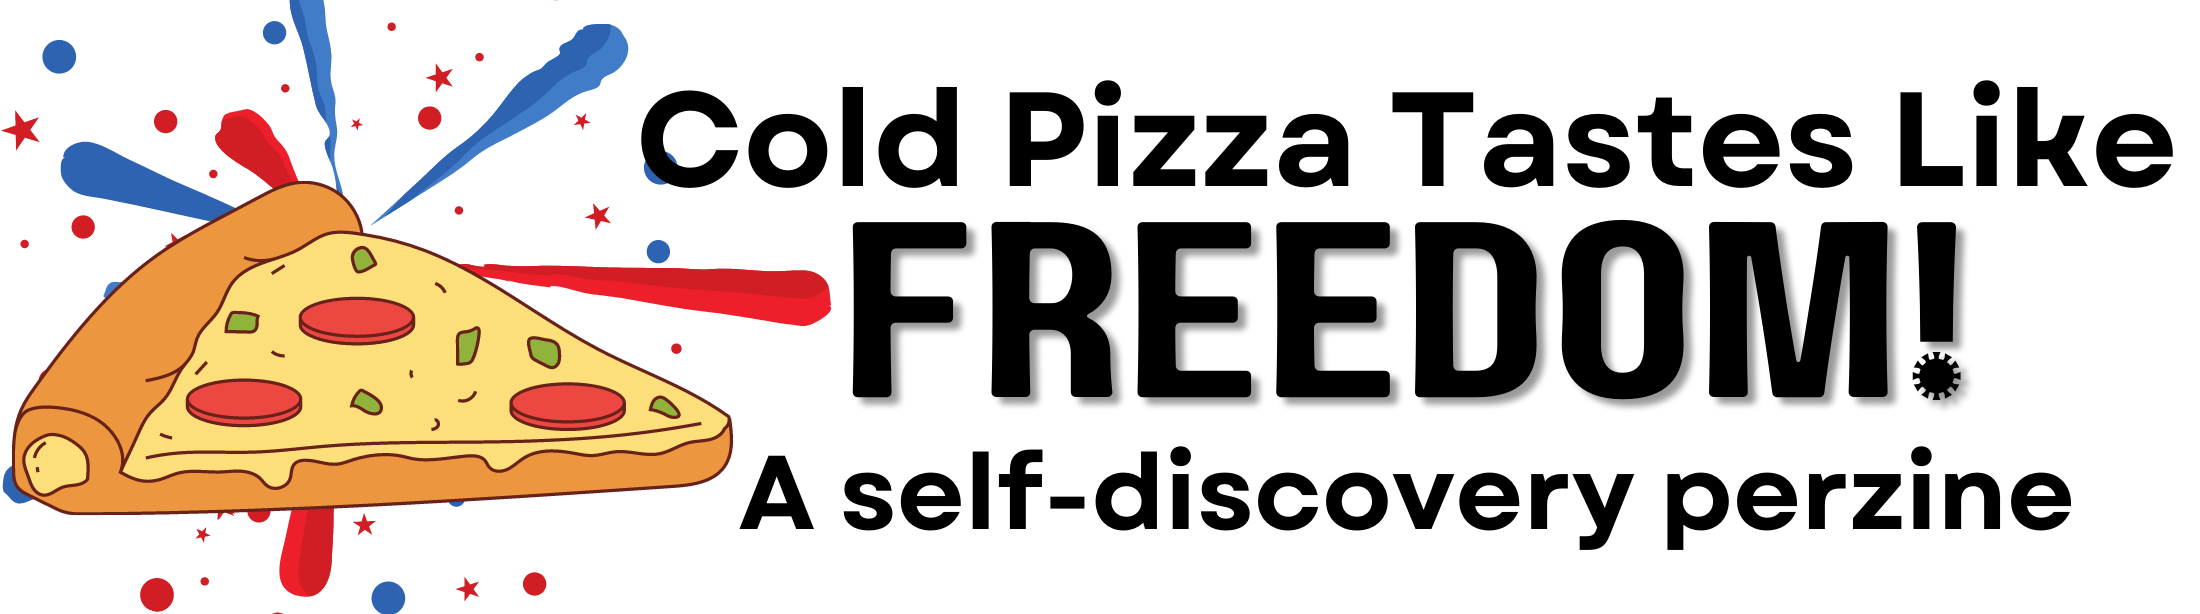 Cold Pizza Tastes Like Freedom